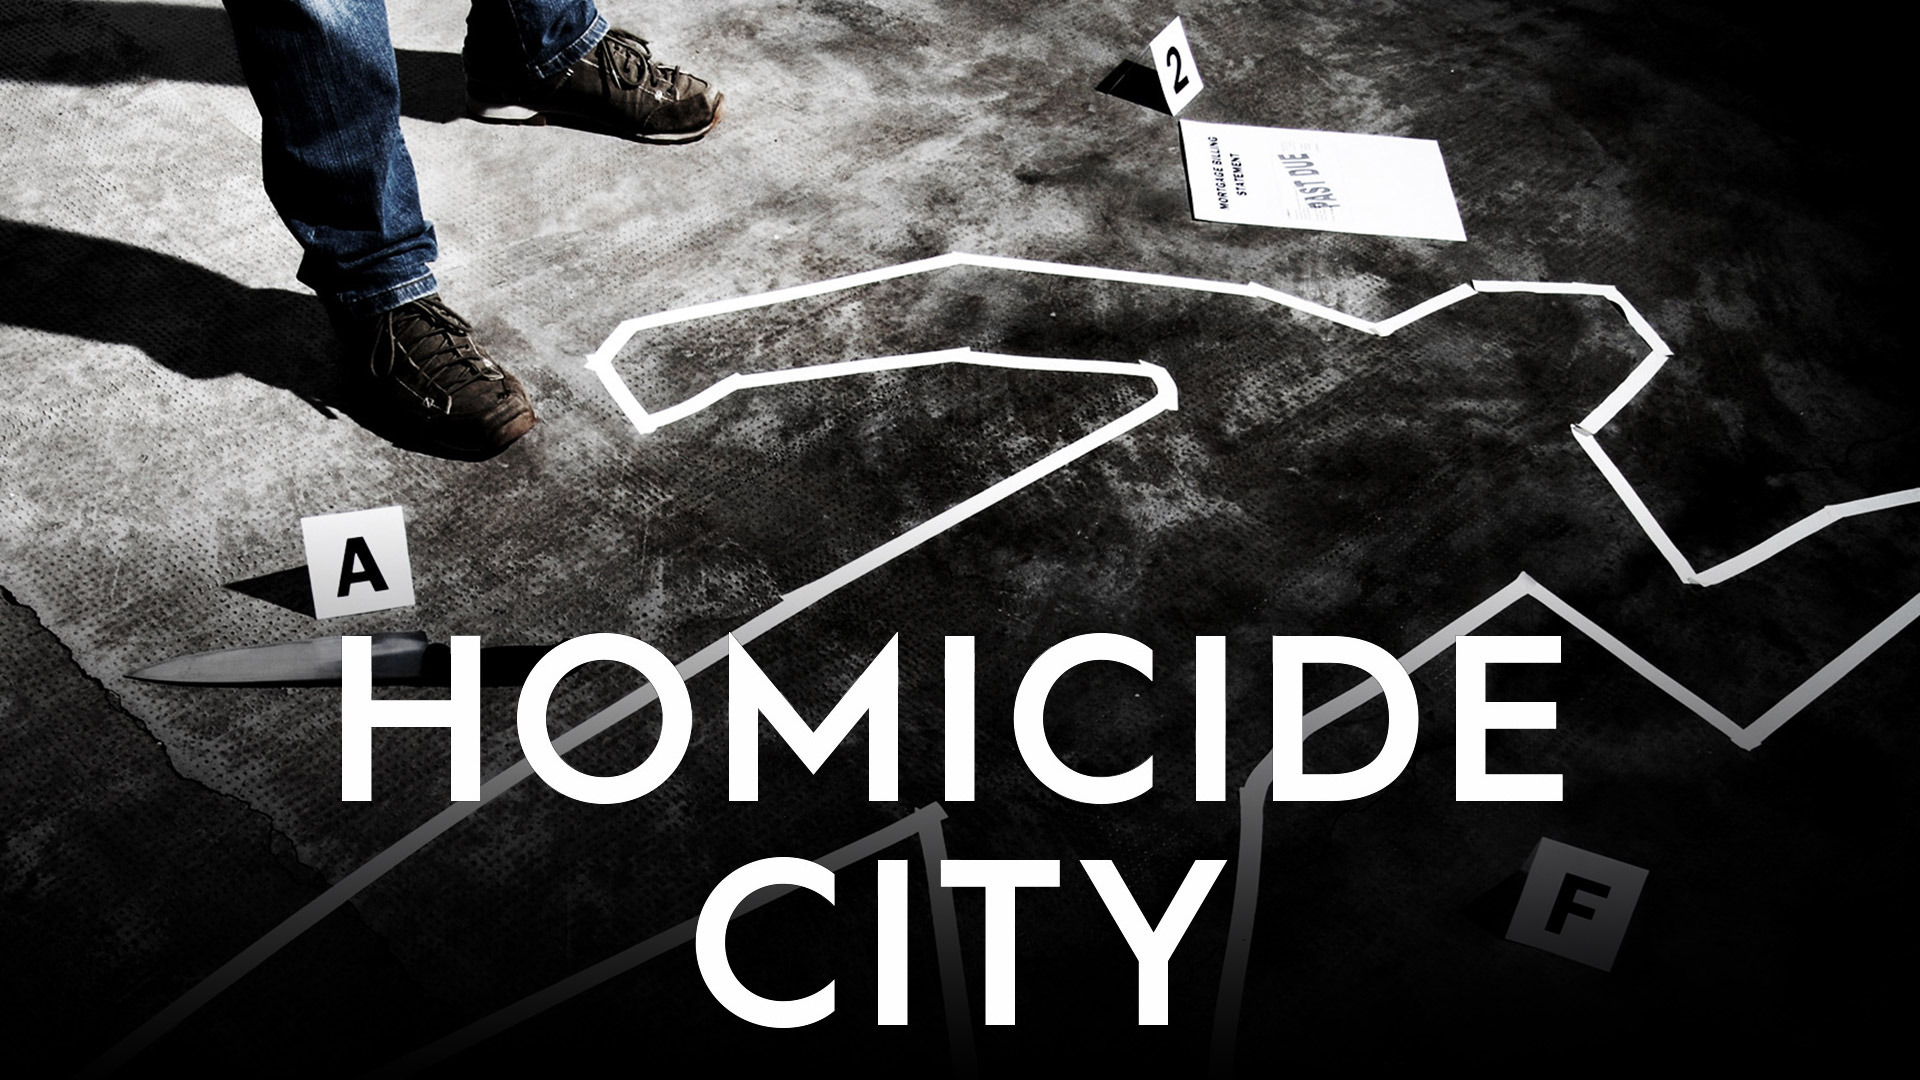 Show Homicide City